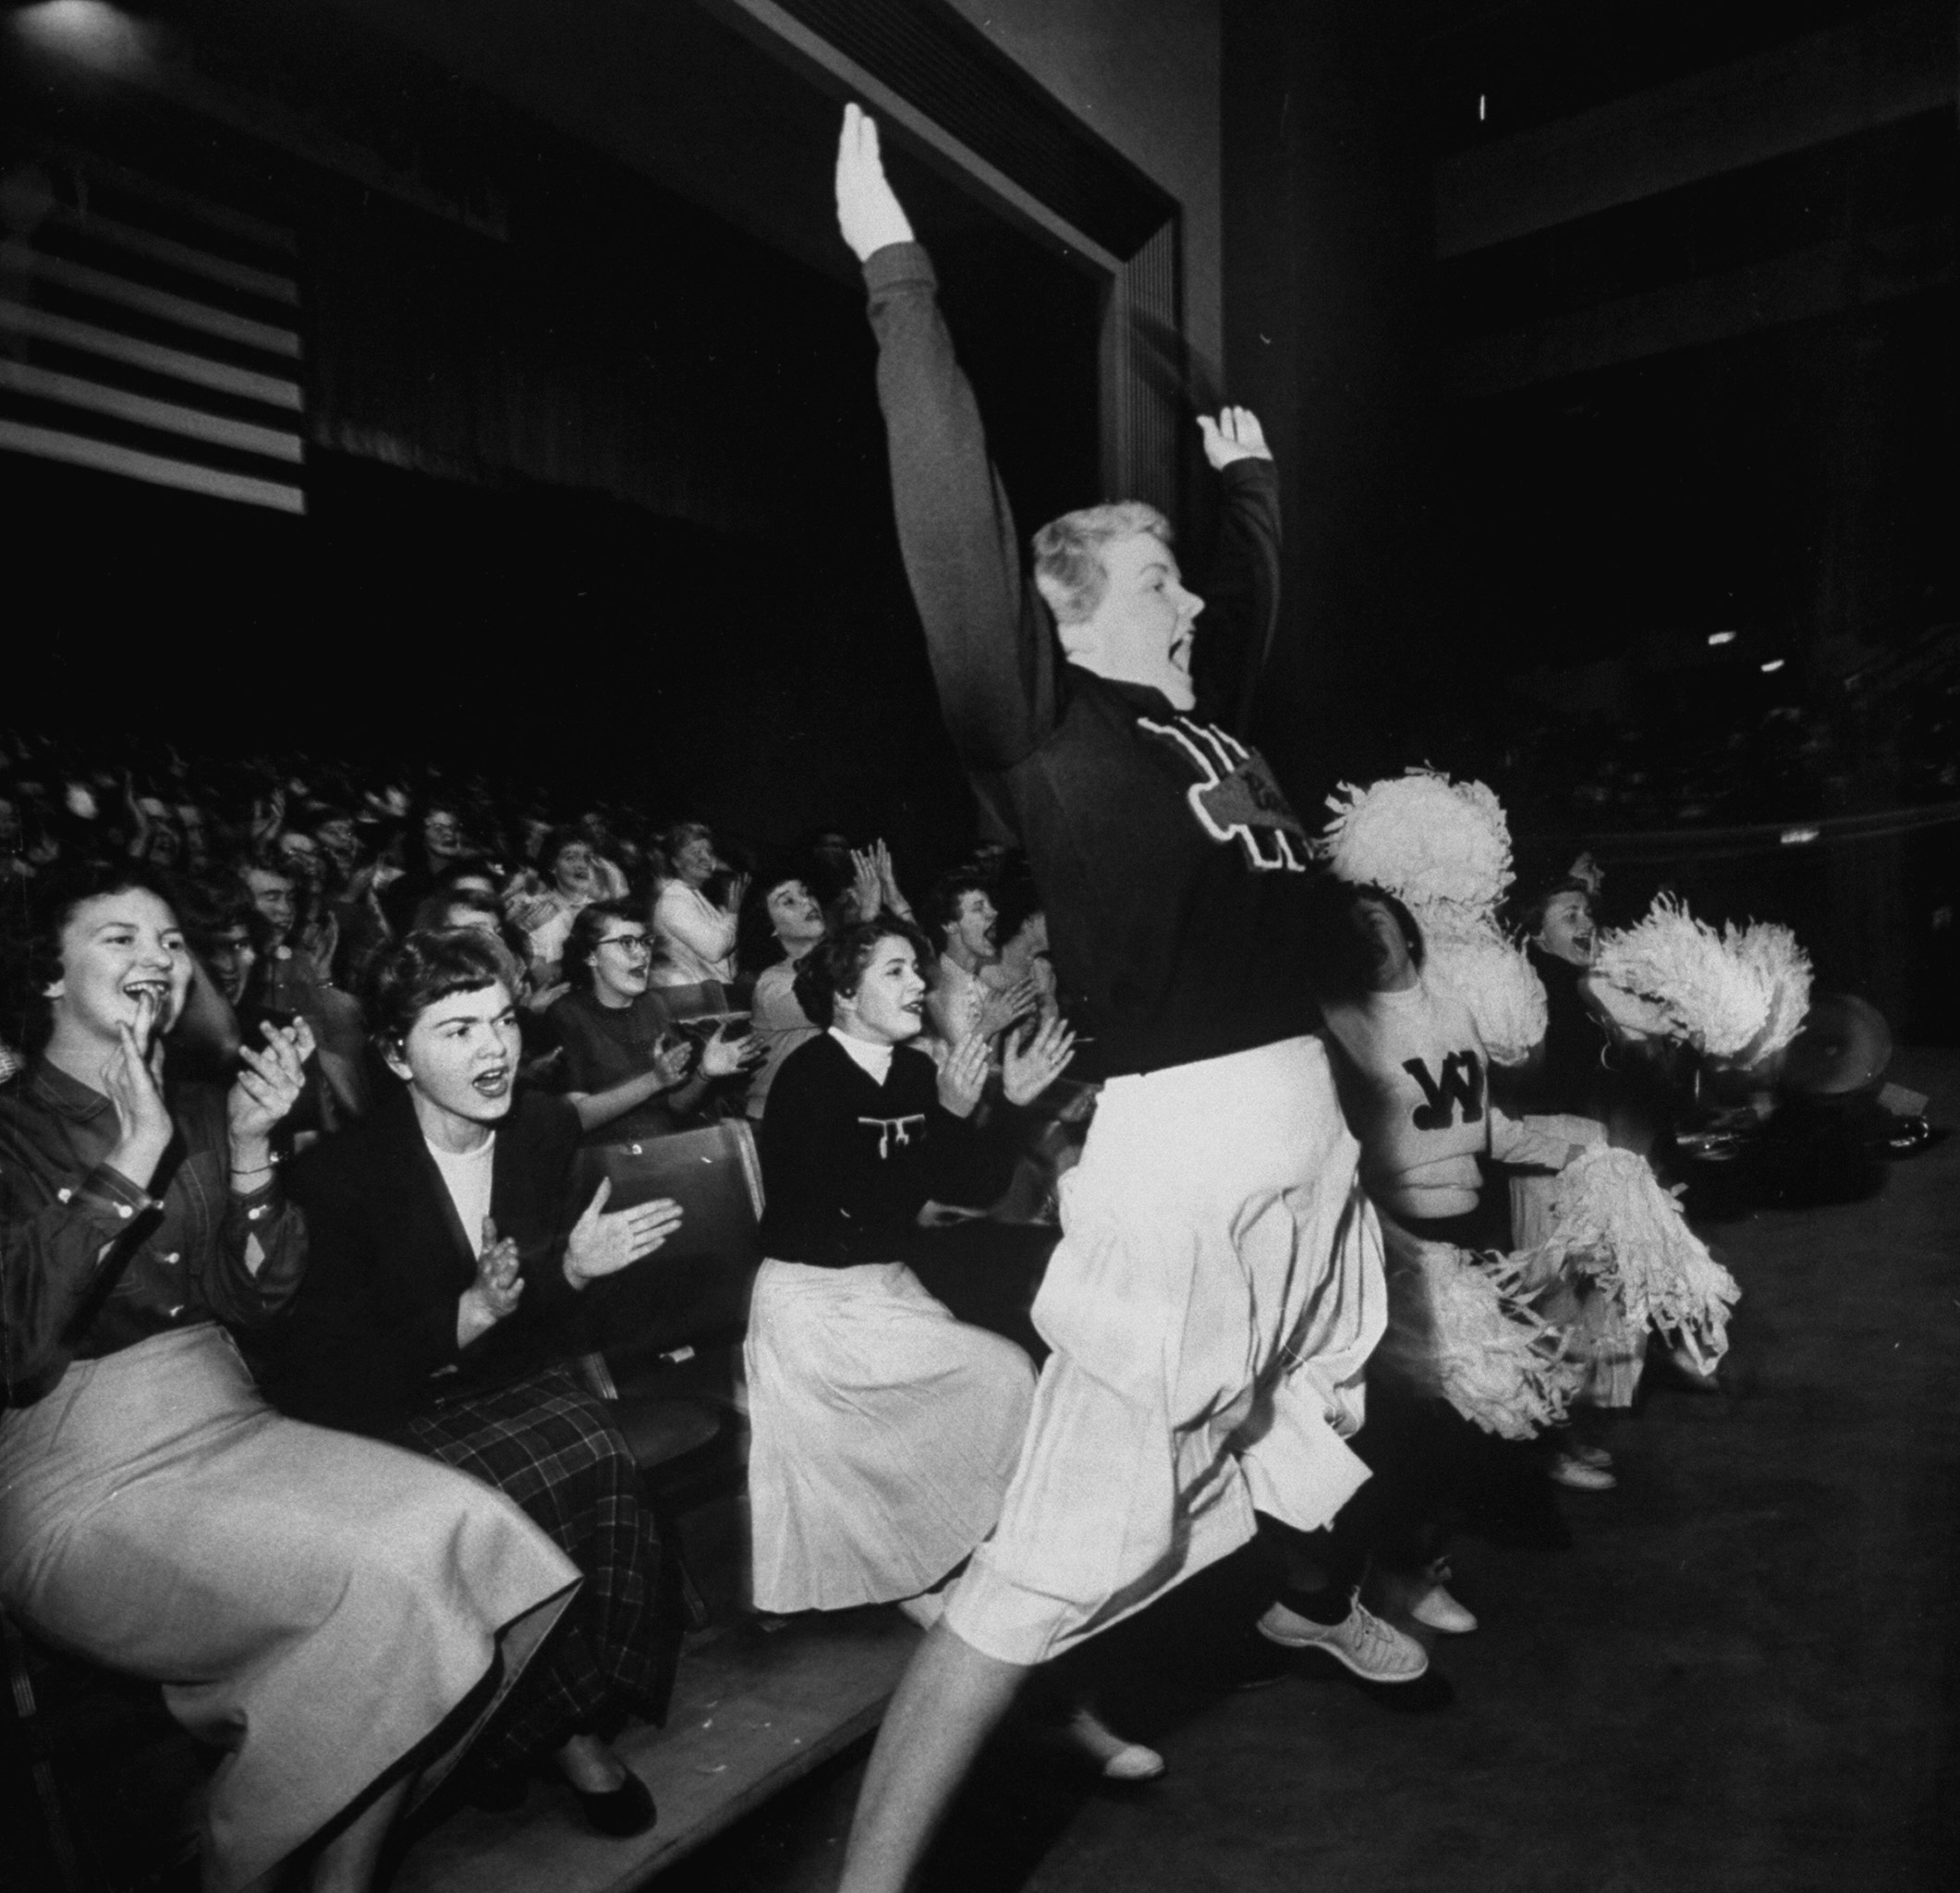 Cheering section of cheerleaders in Spokane Coliseum, 1954.